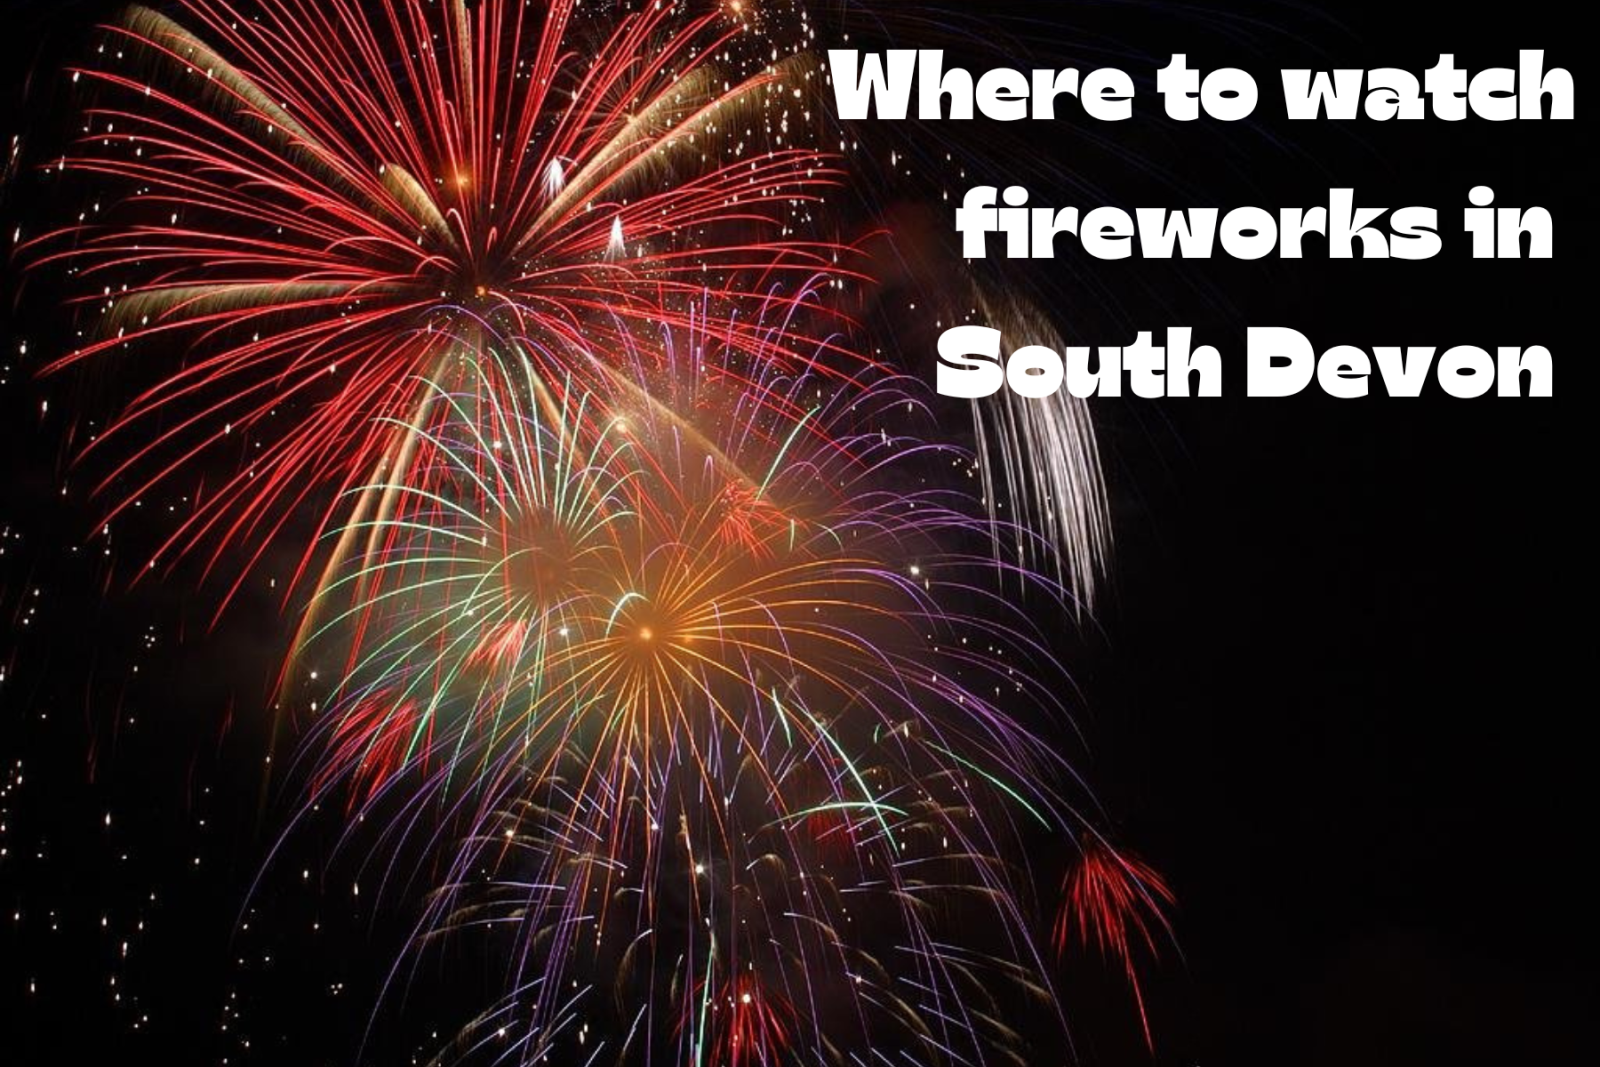 where to watch fireworks in South Devon